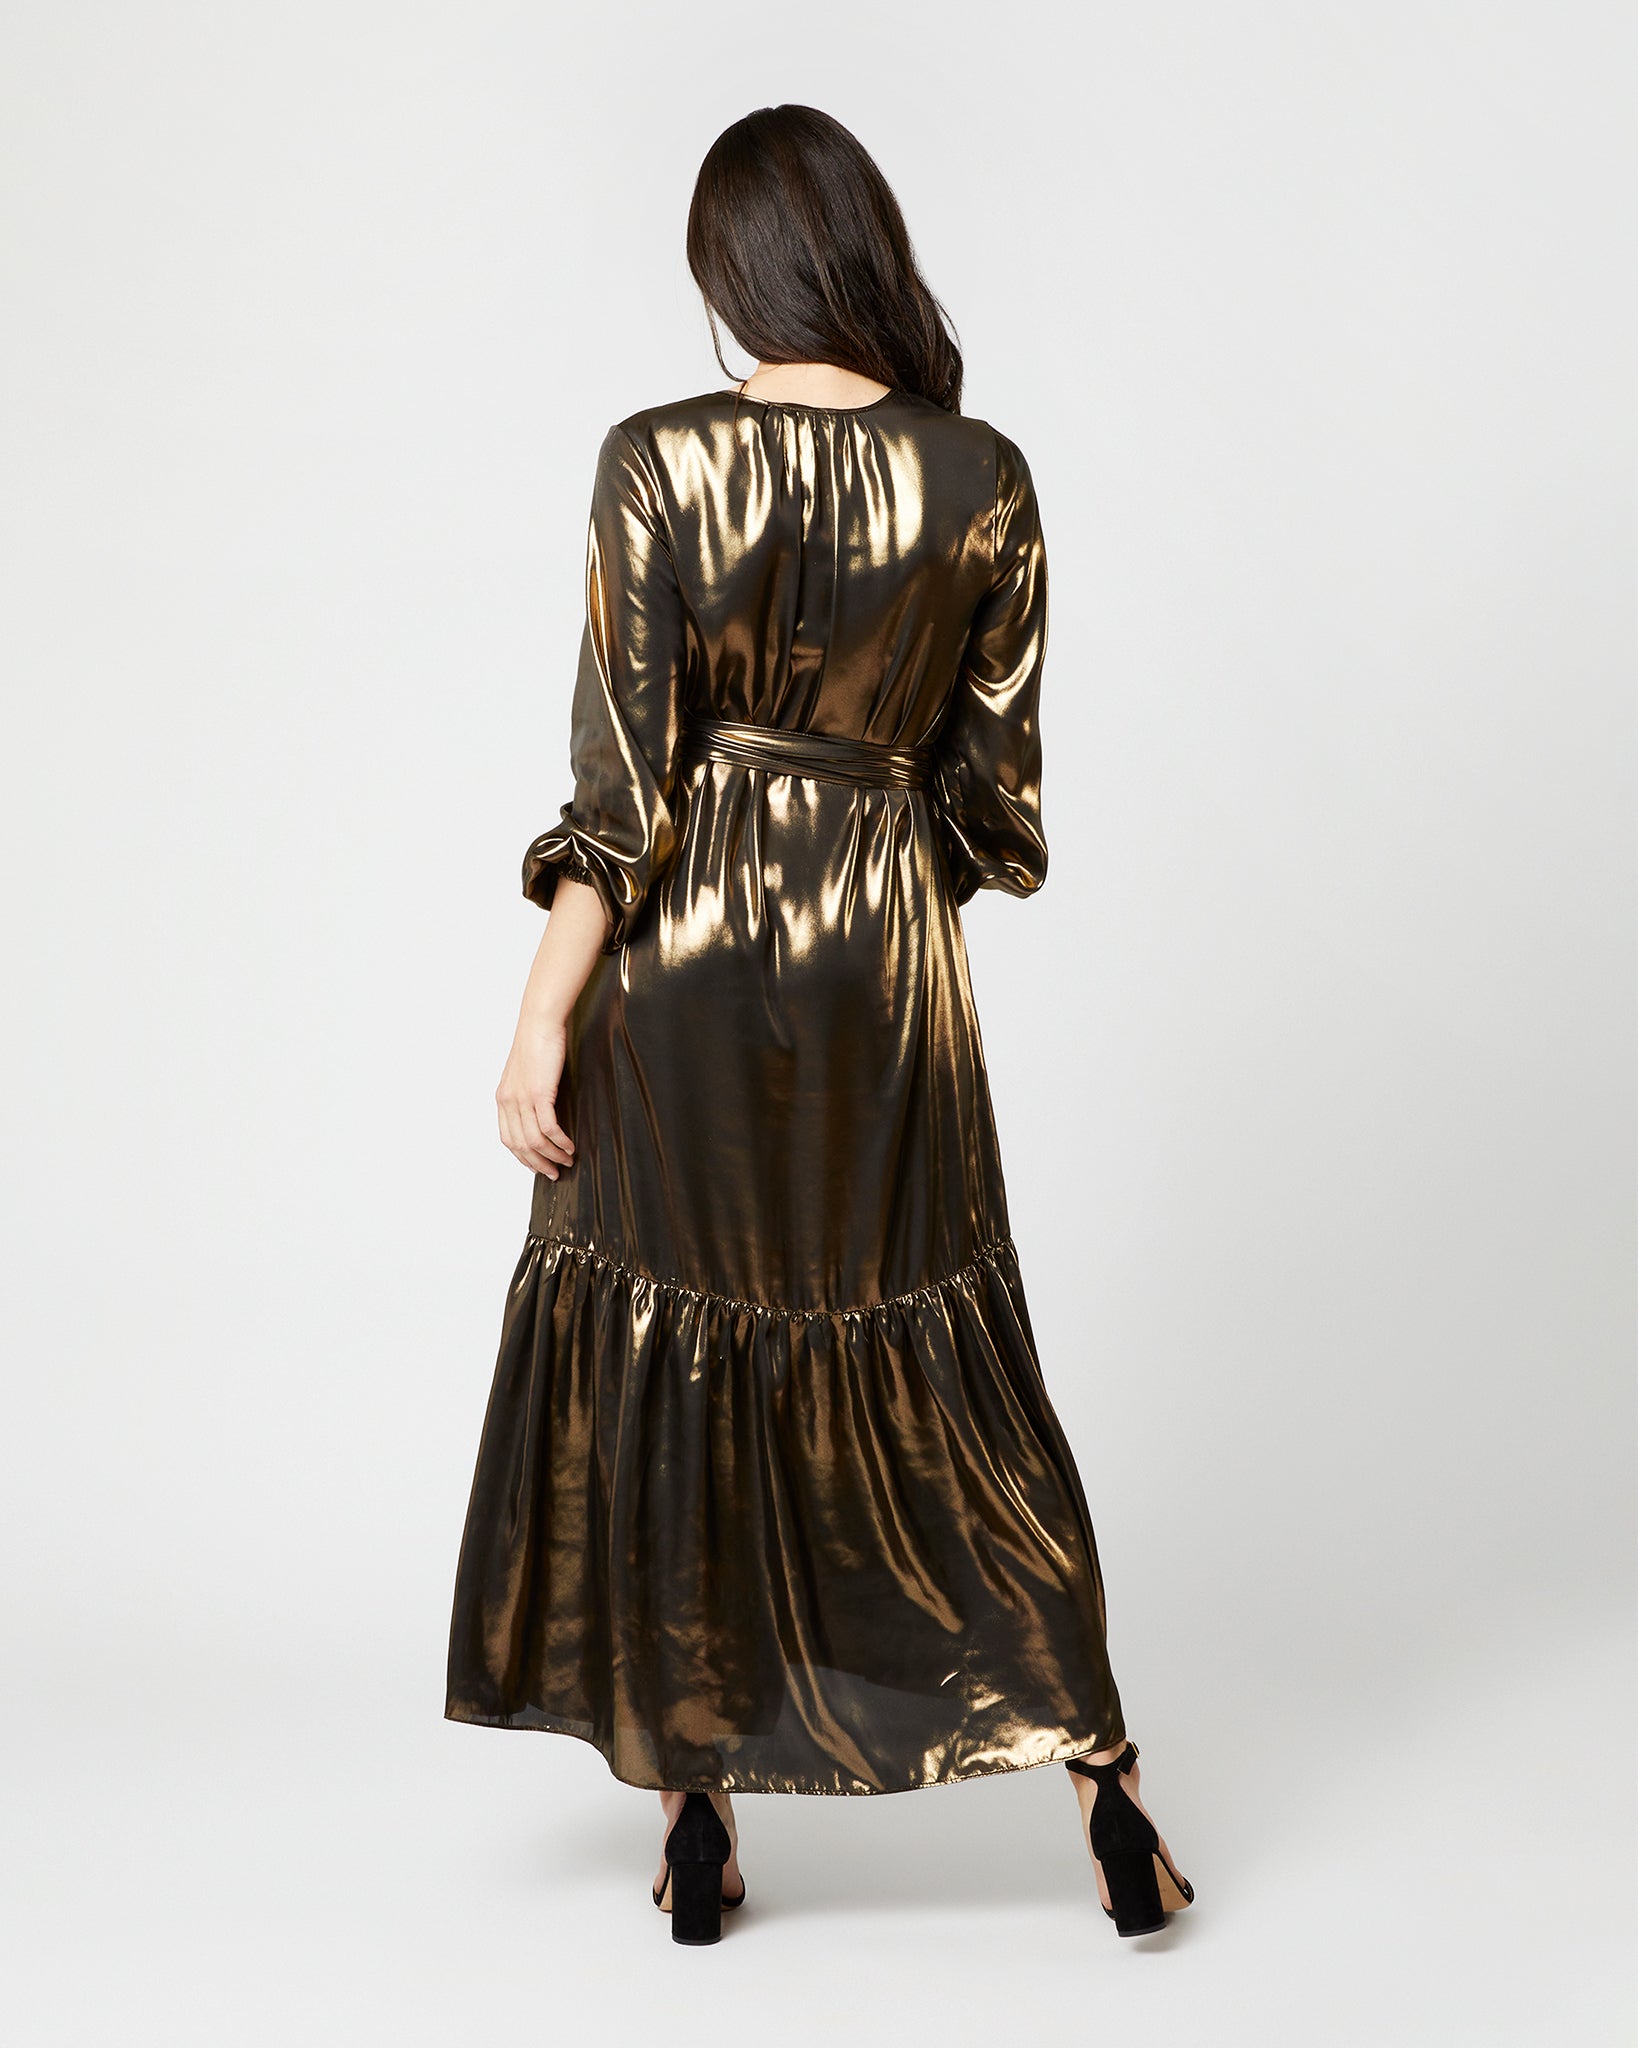 Aba Maxi Dress in Gold Lamé